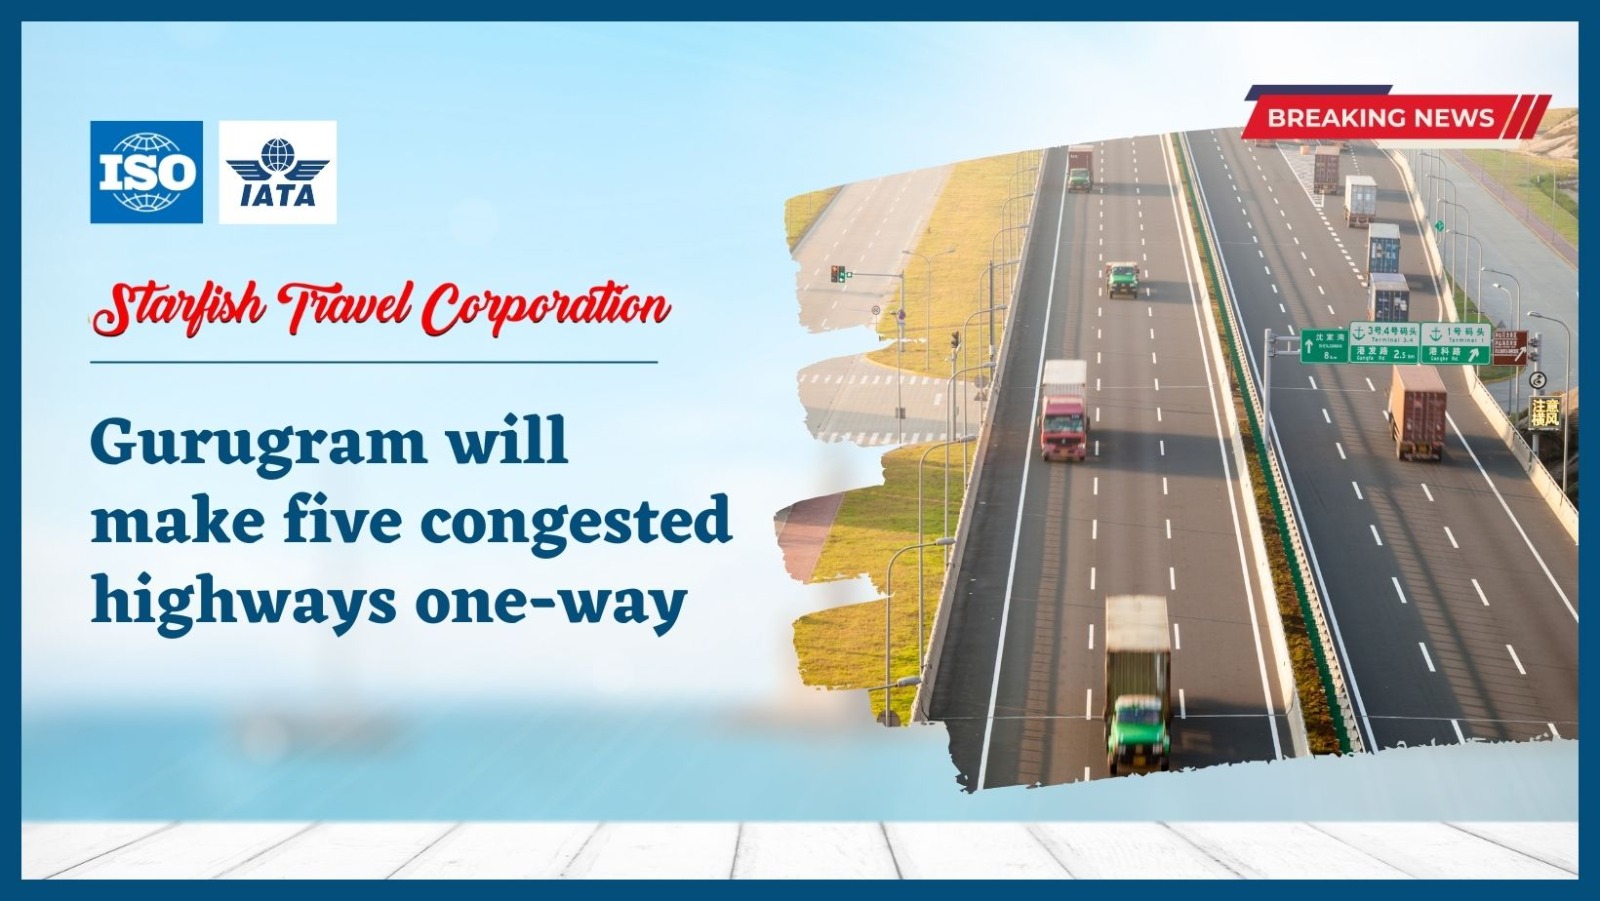 Gurugram will make five congested highways one-way